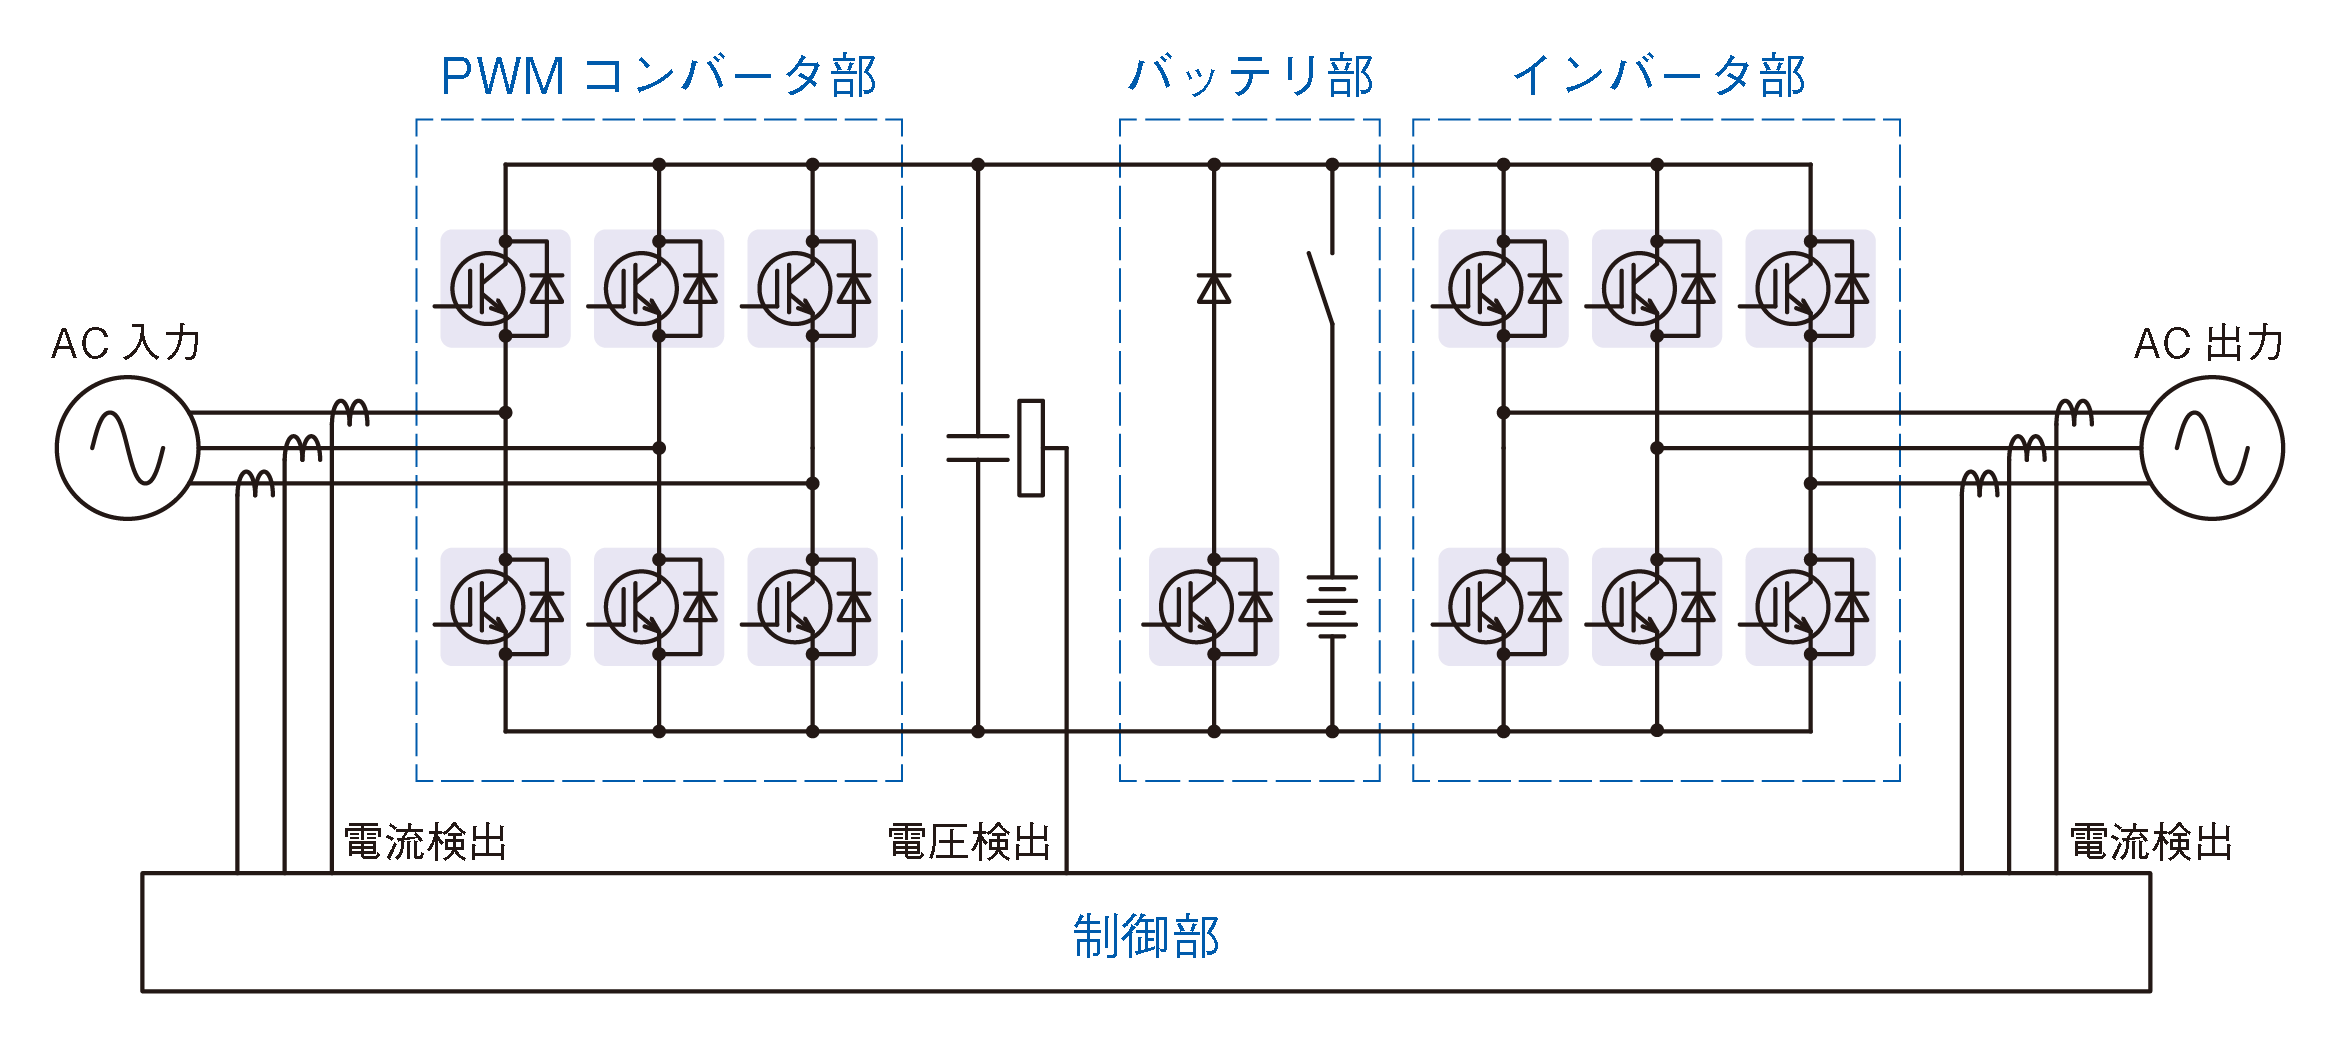 UPSの回路構成の図